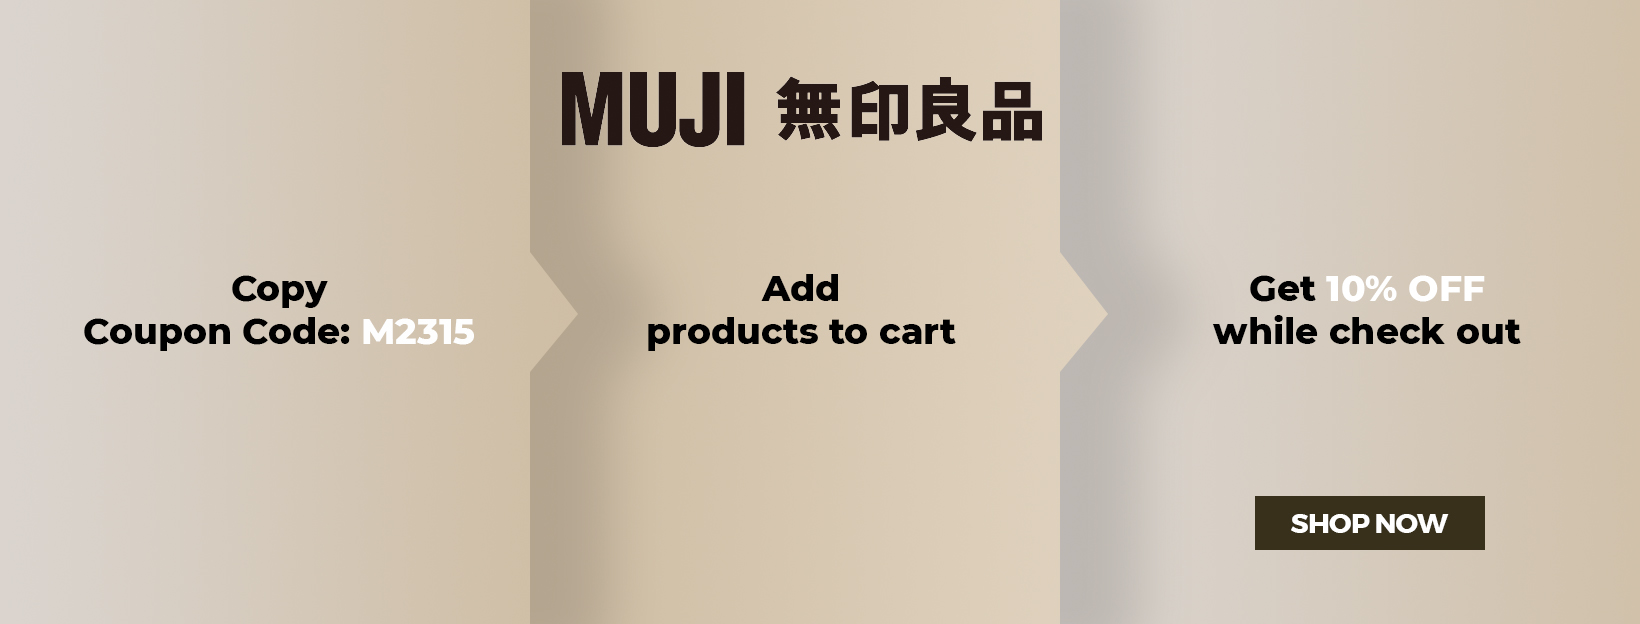 Muji Kuwait Promo Code